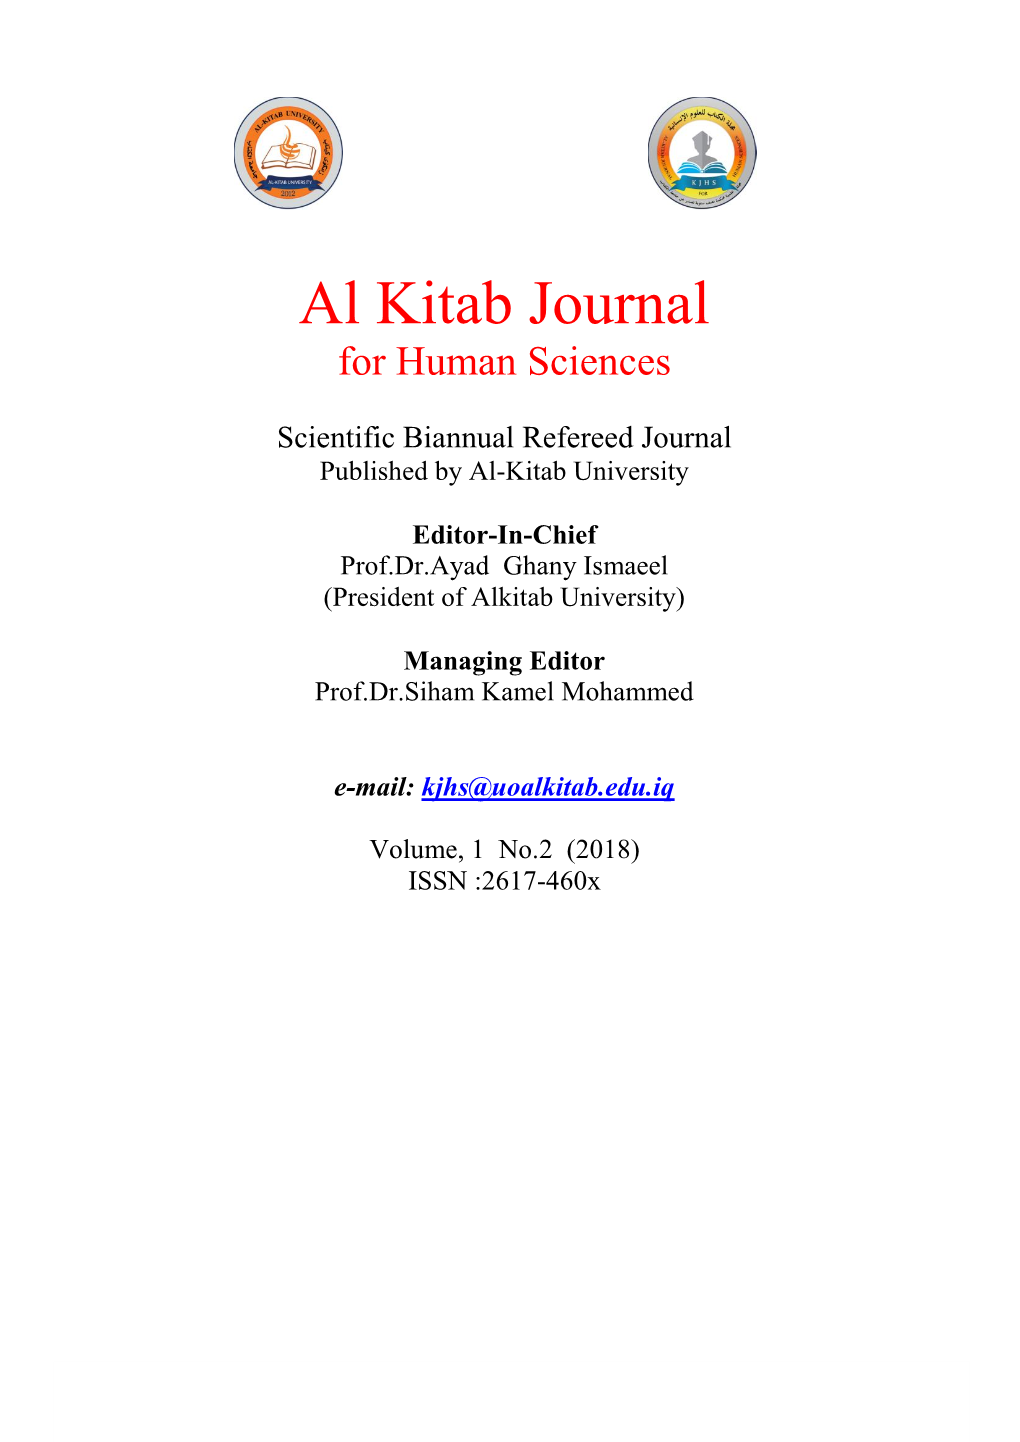 Al Kitab Journal for Human Sciences